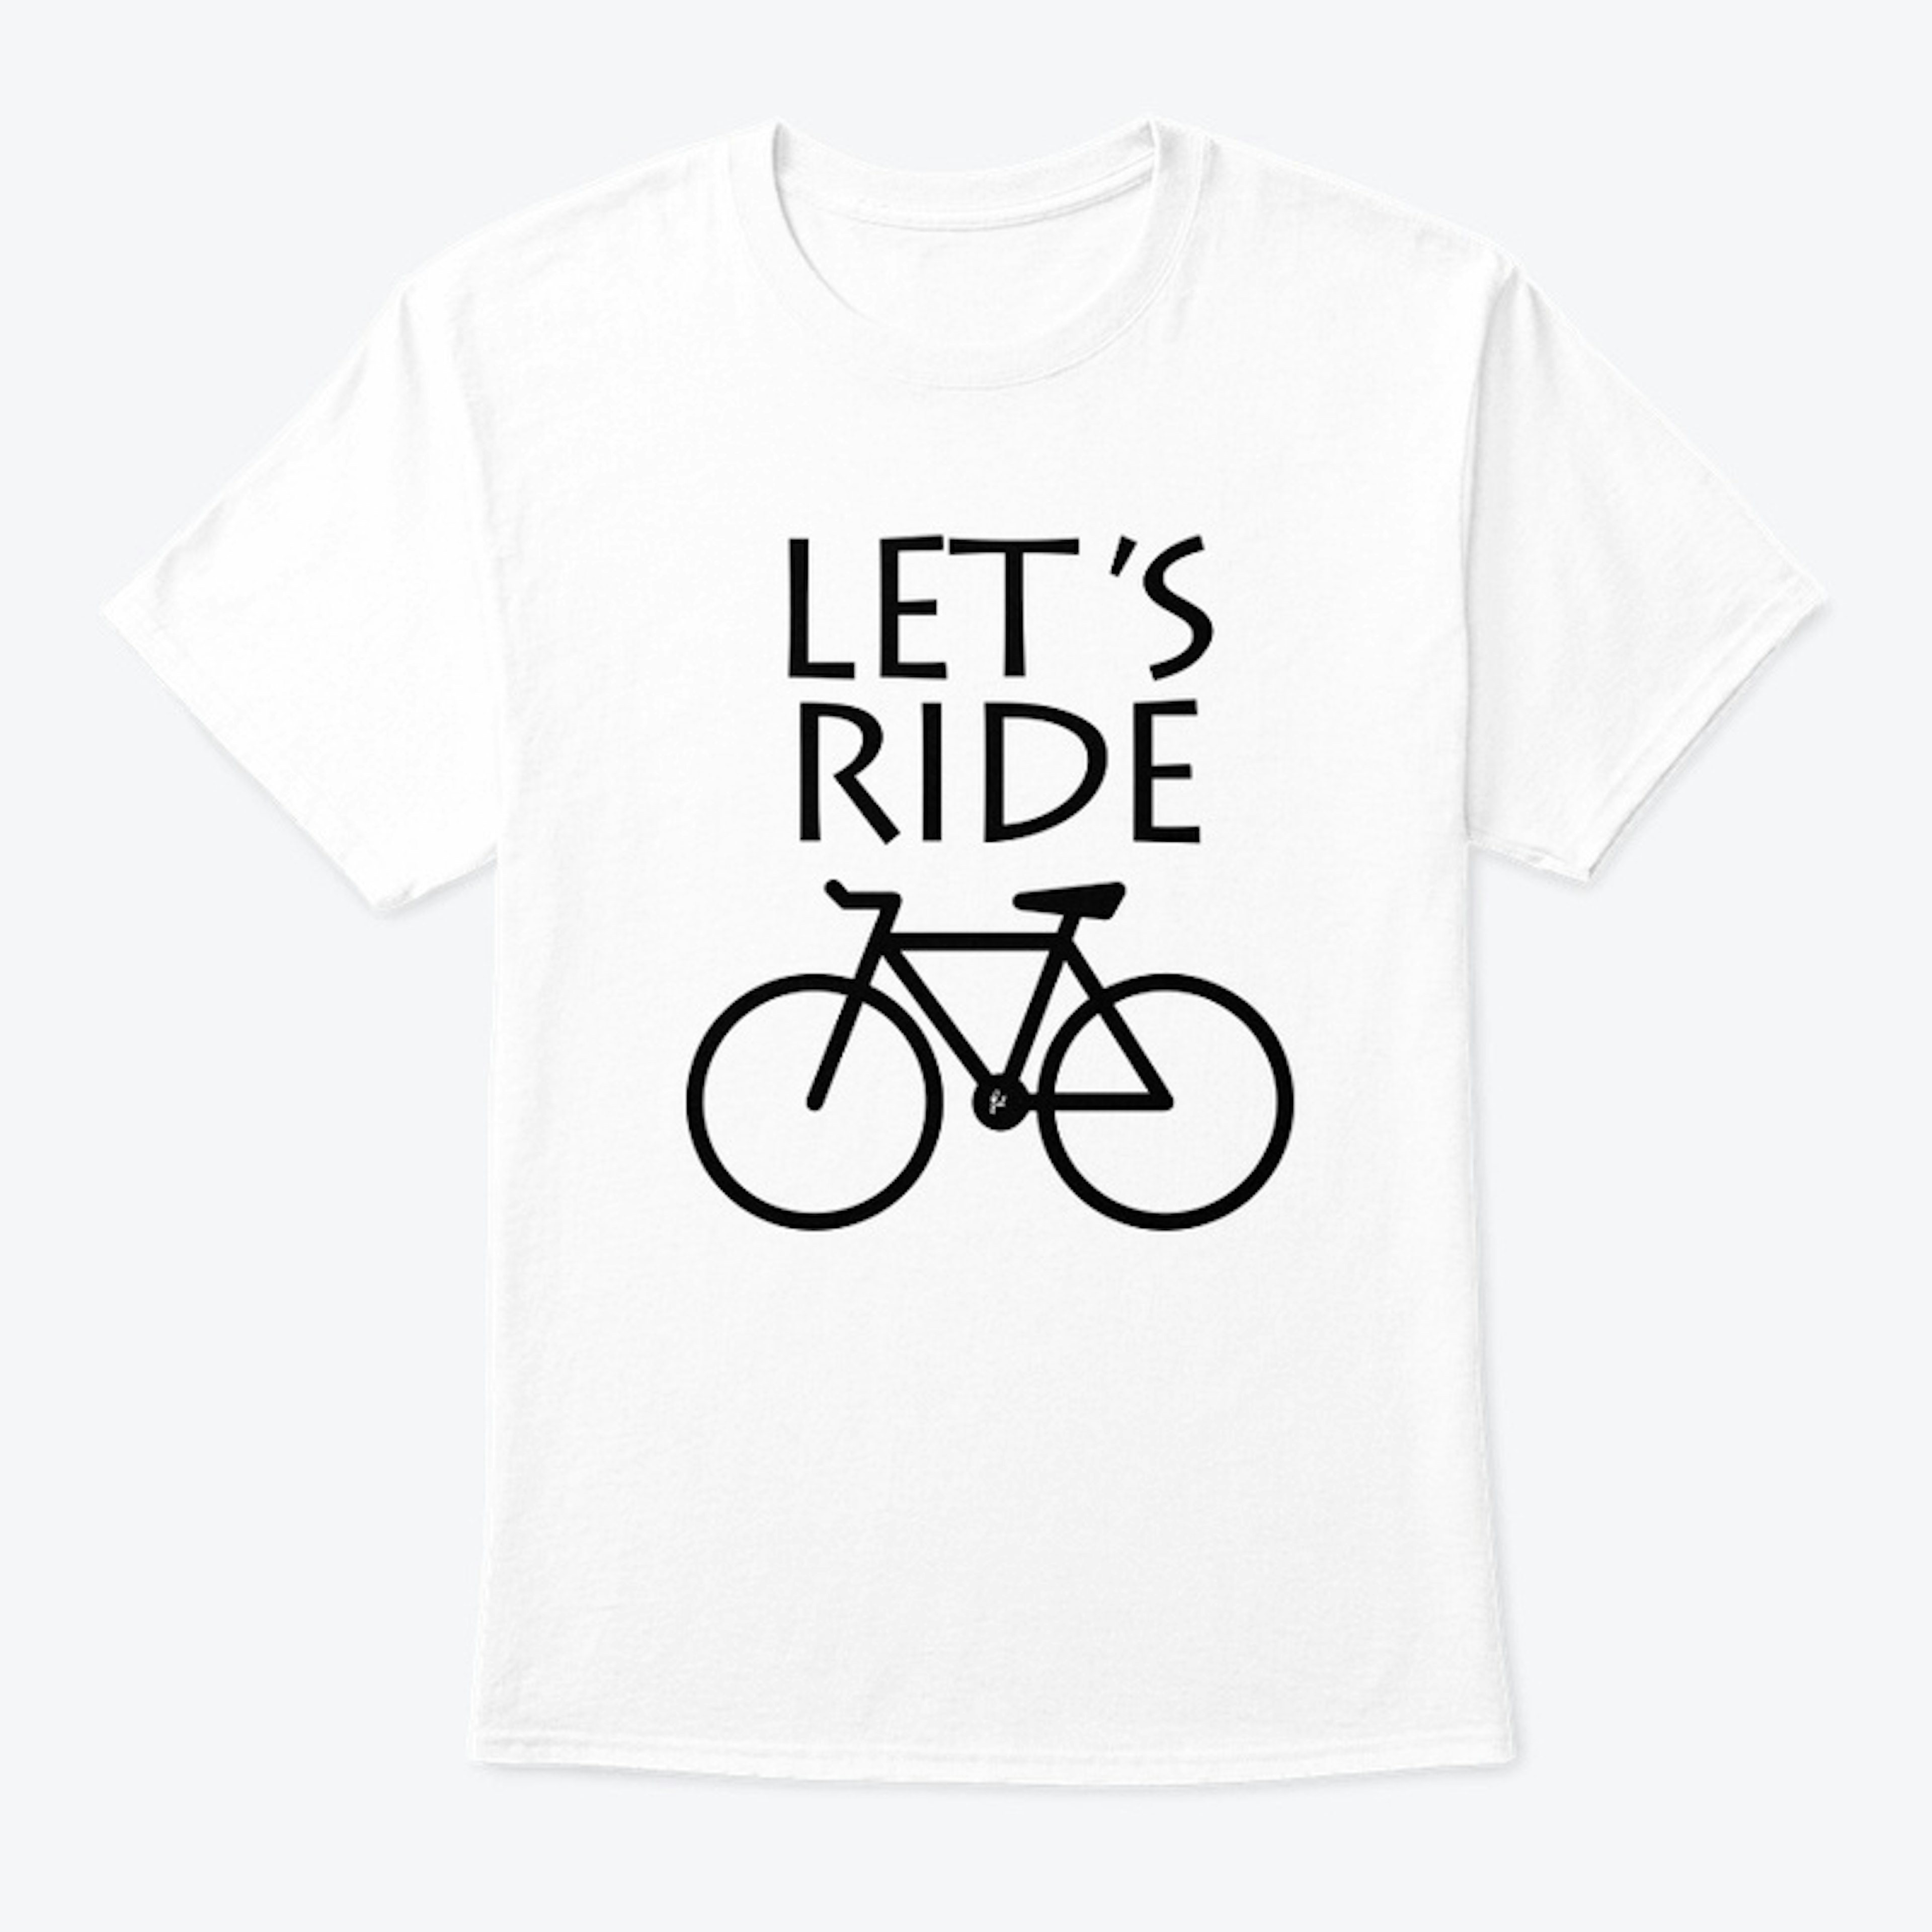 Cycling Merchandise